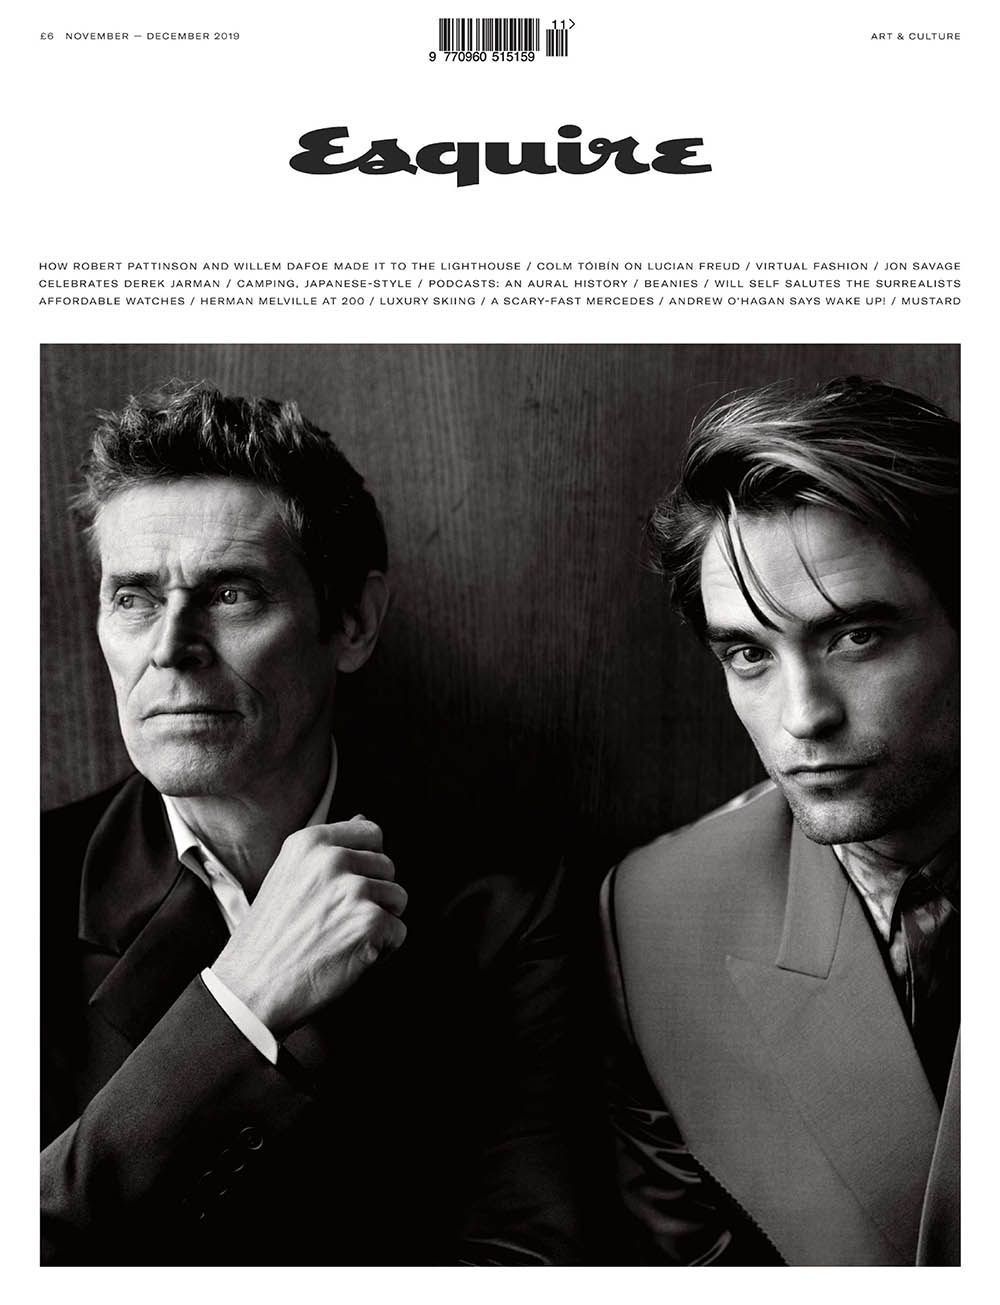 Willem Dafoe and Robert Pattinson cover Esquire UK November December 2019 by Alasdair McLellan